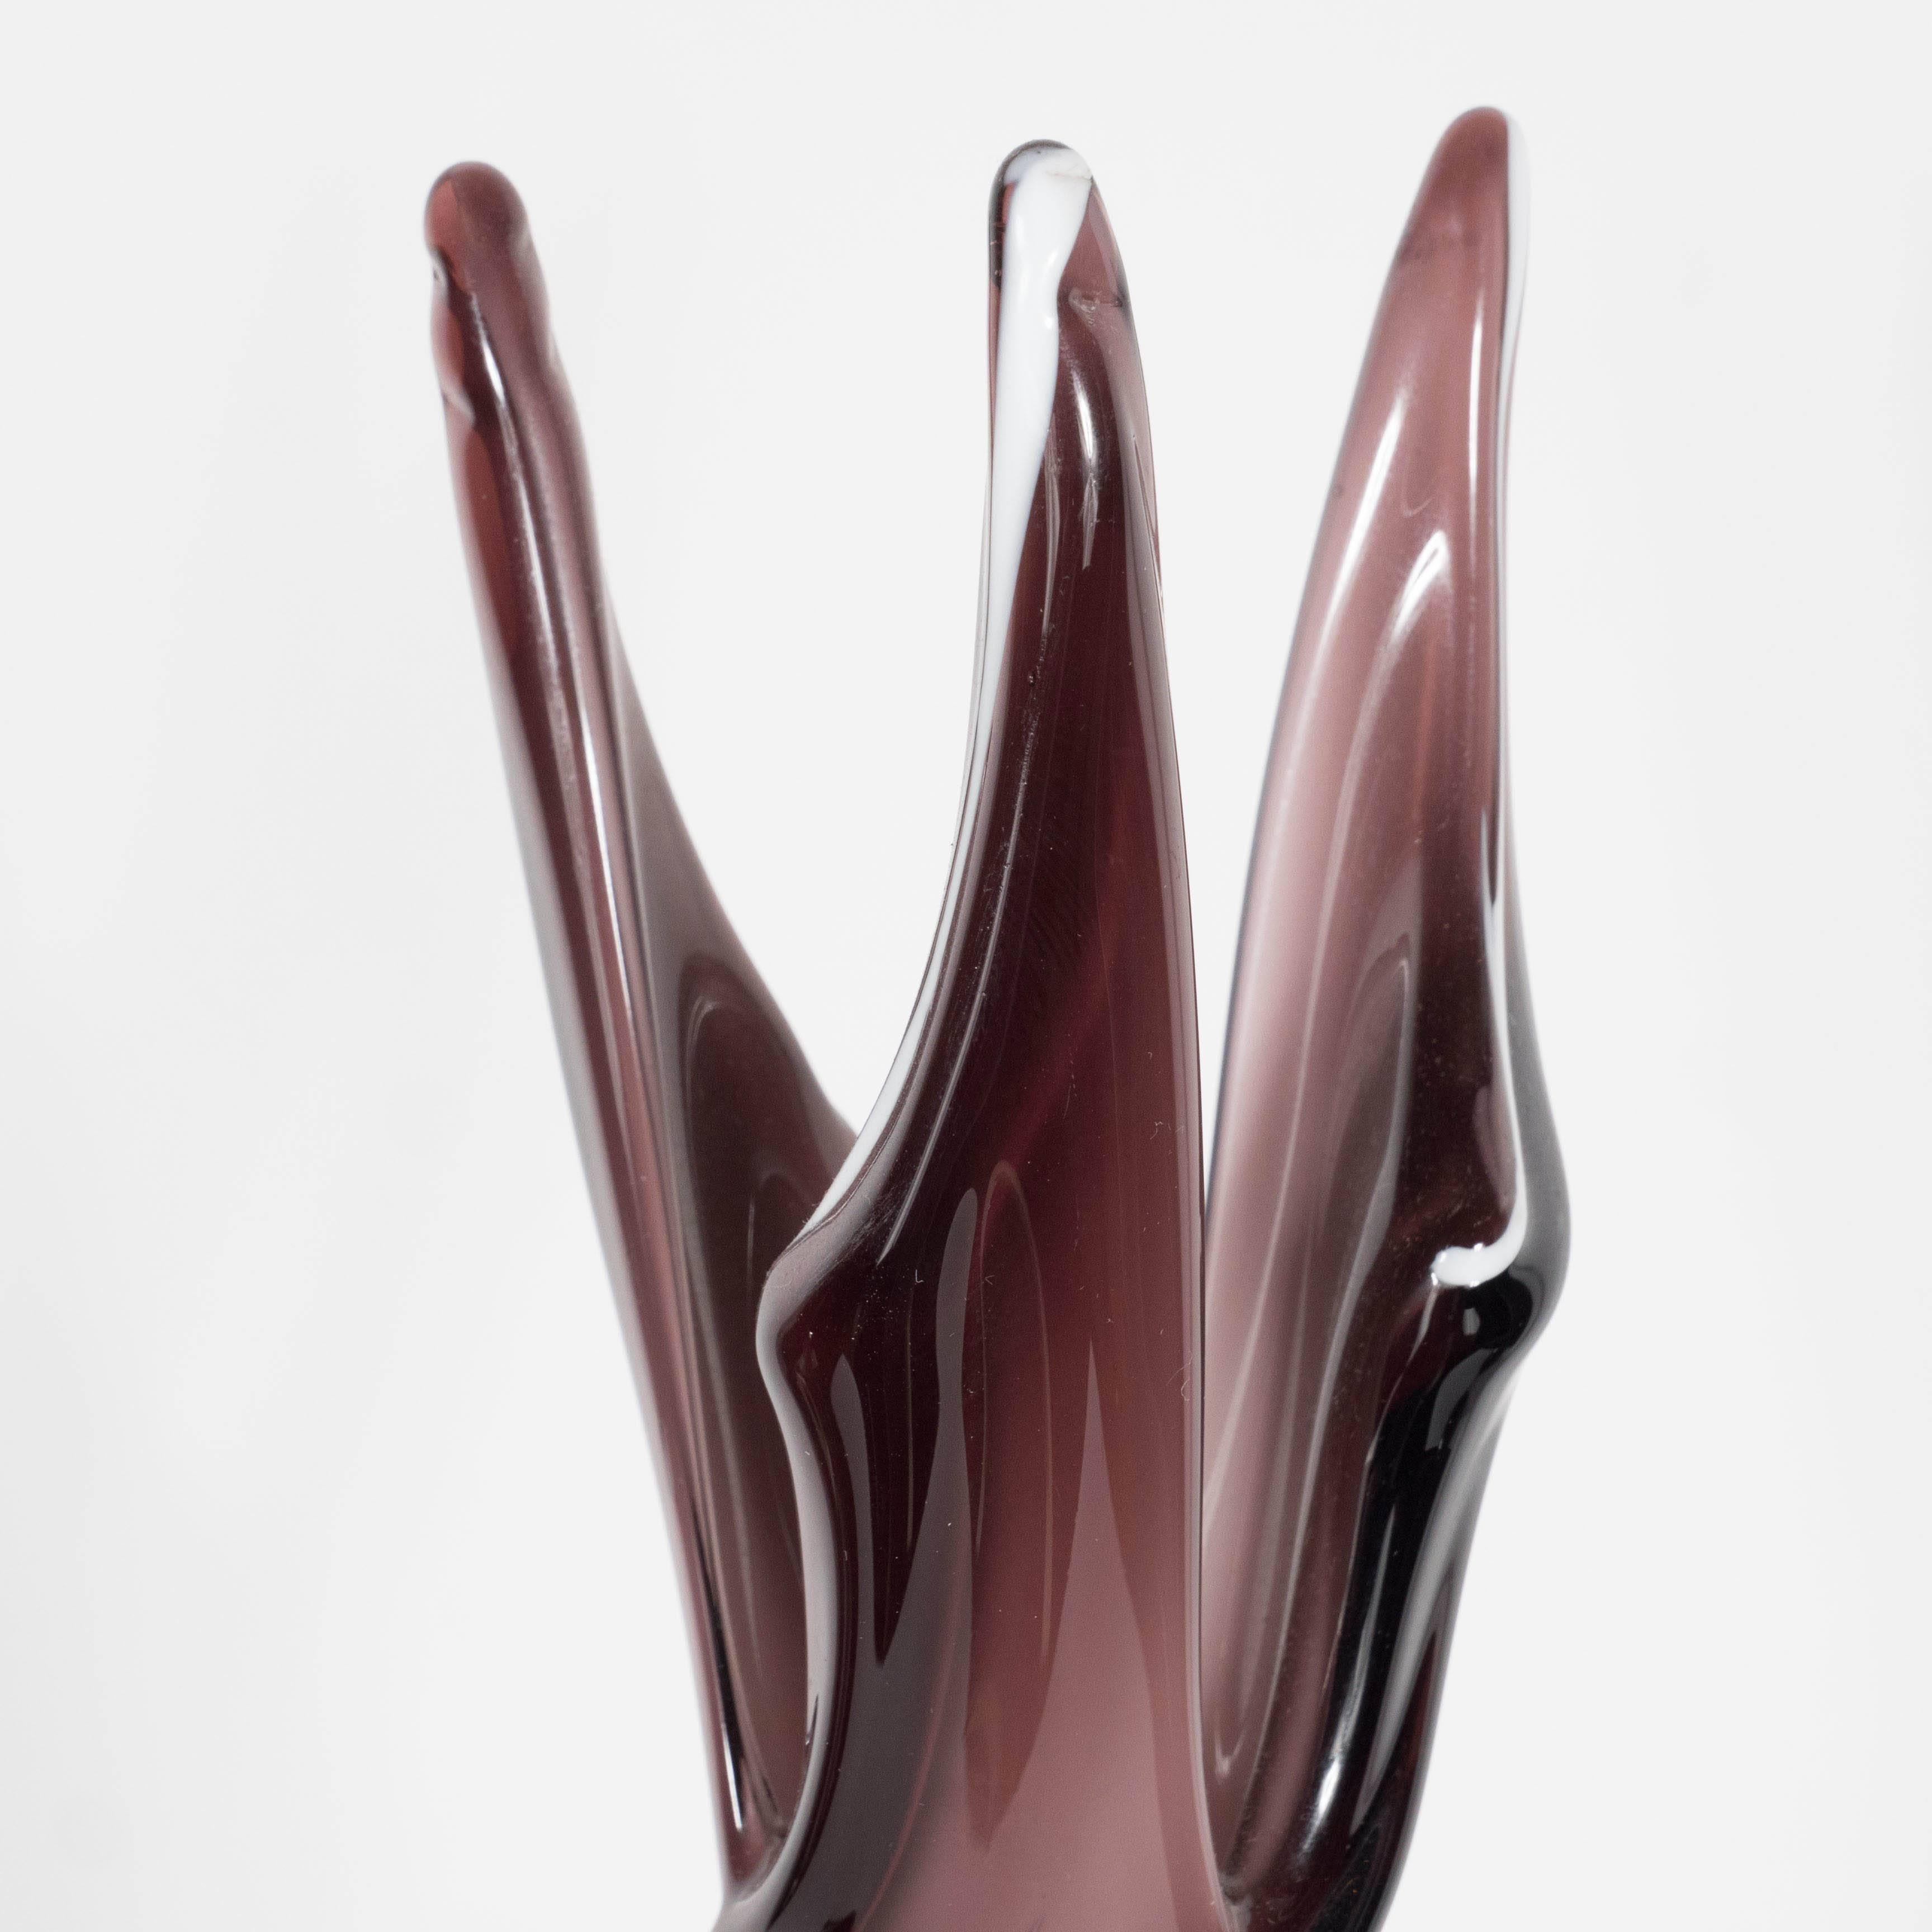 Italian Mid-Century Swirl Form Murano Vase in Amethyst and Aubergine Tones